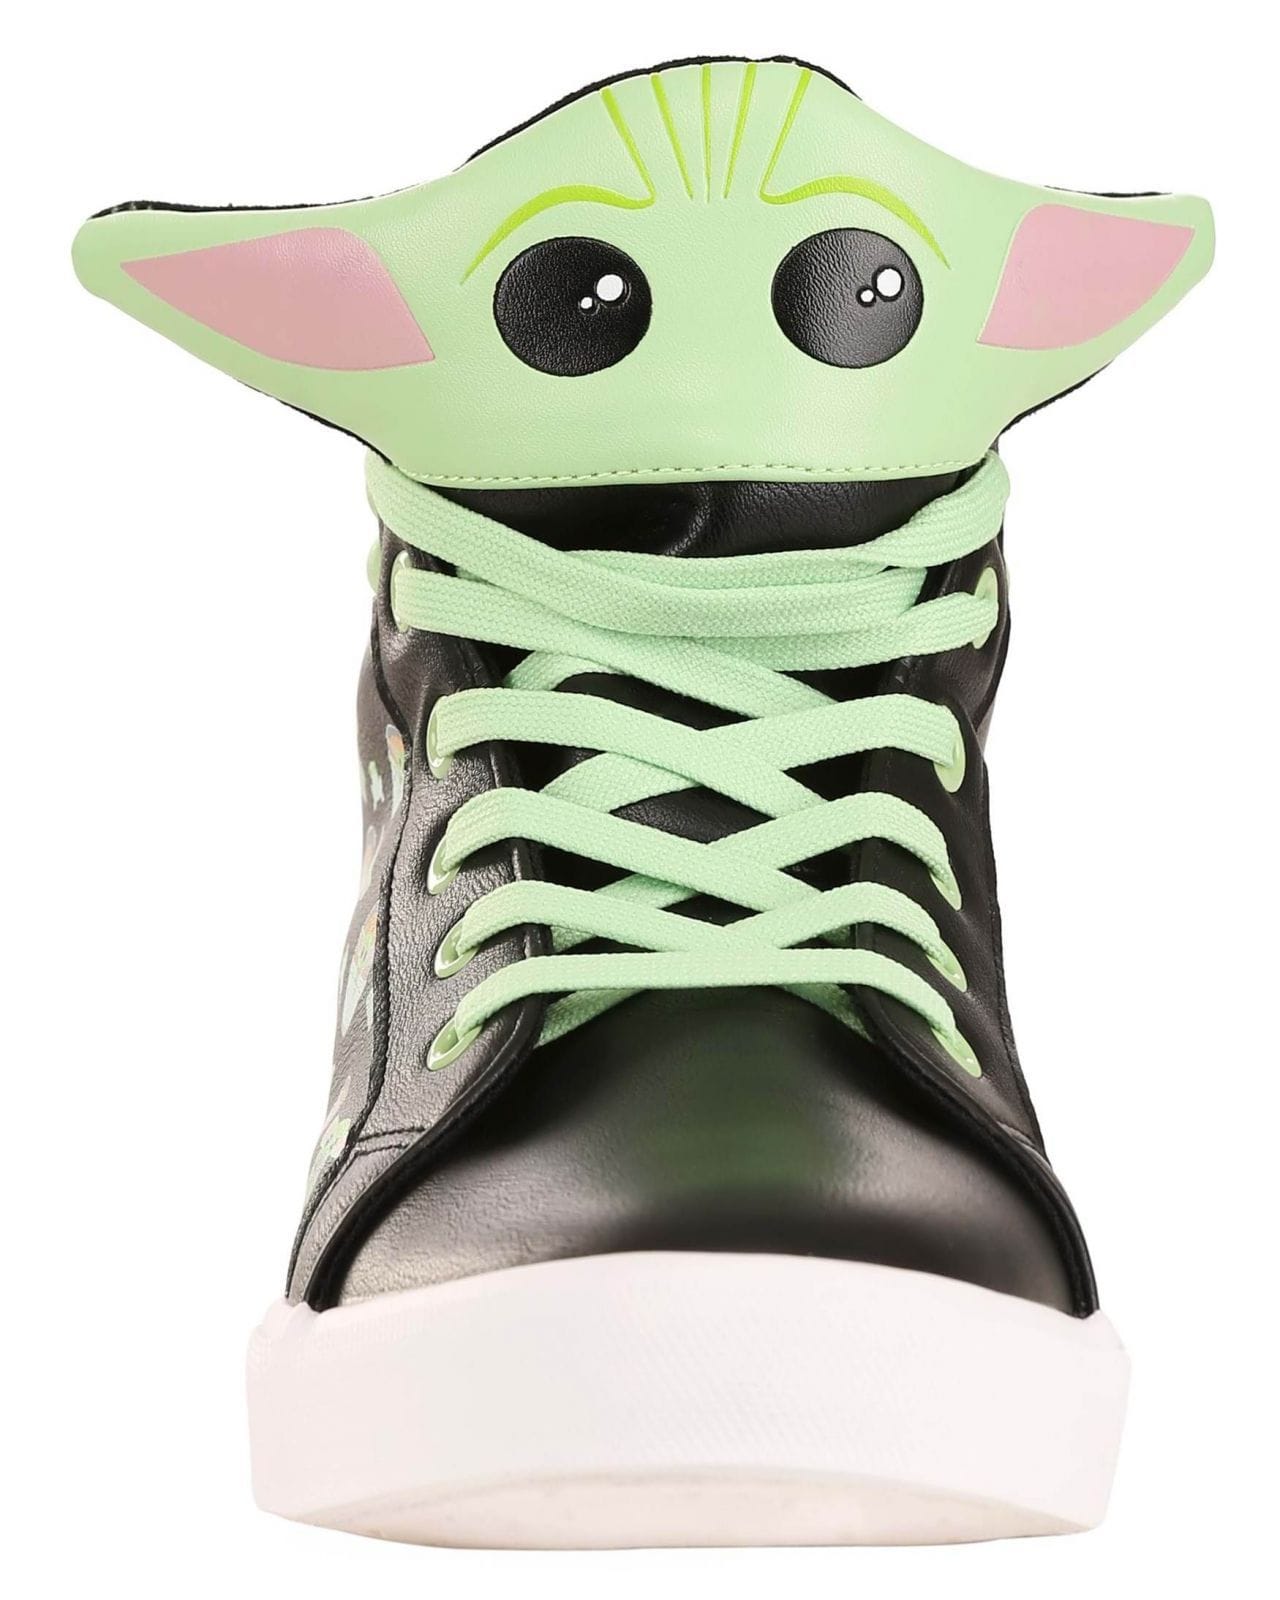 Star Wars : allez vous craquer pour les sneakers Baby Yoda ? #8